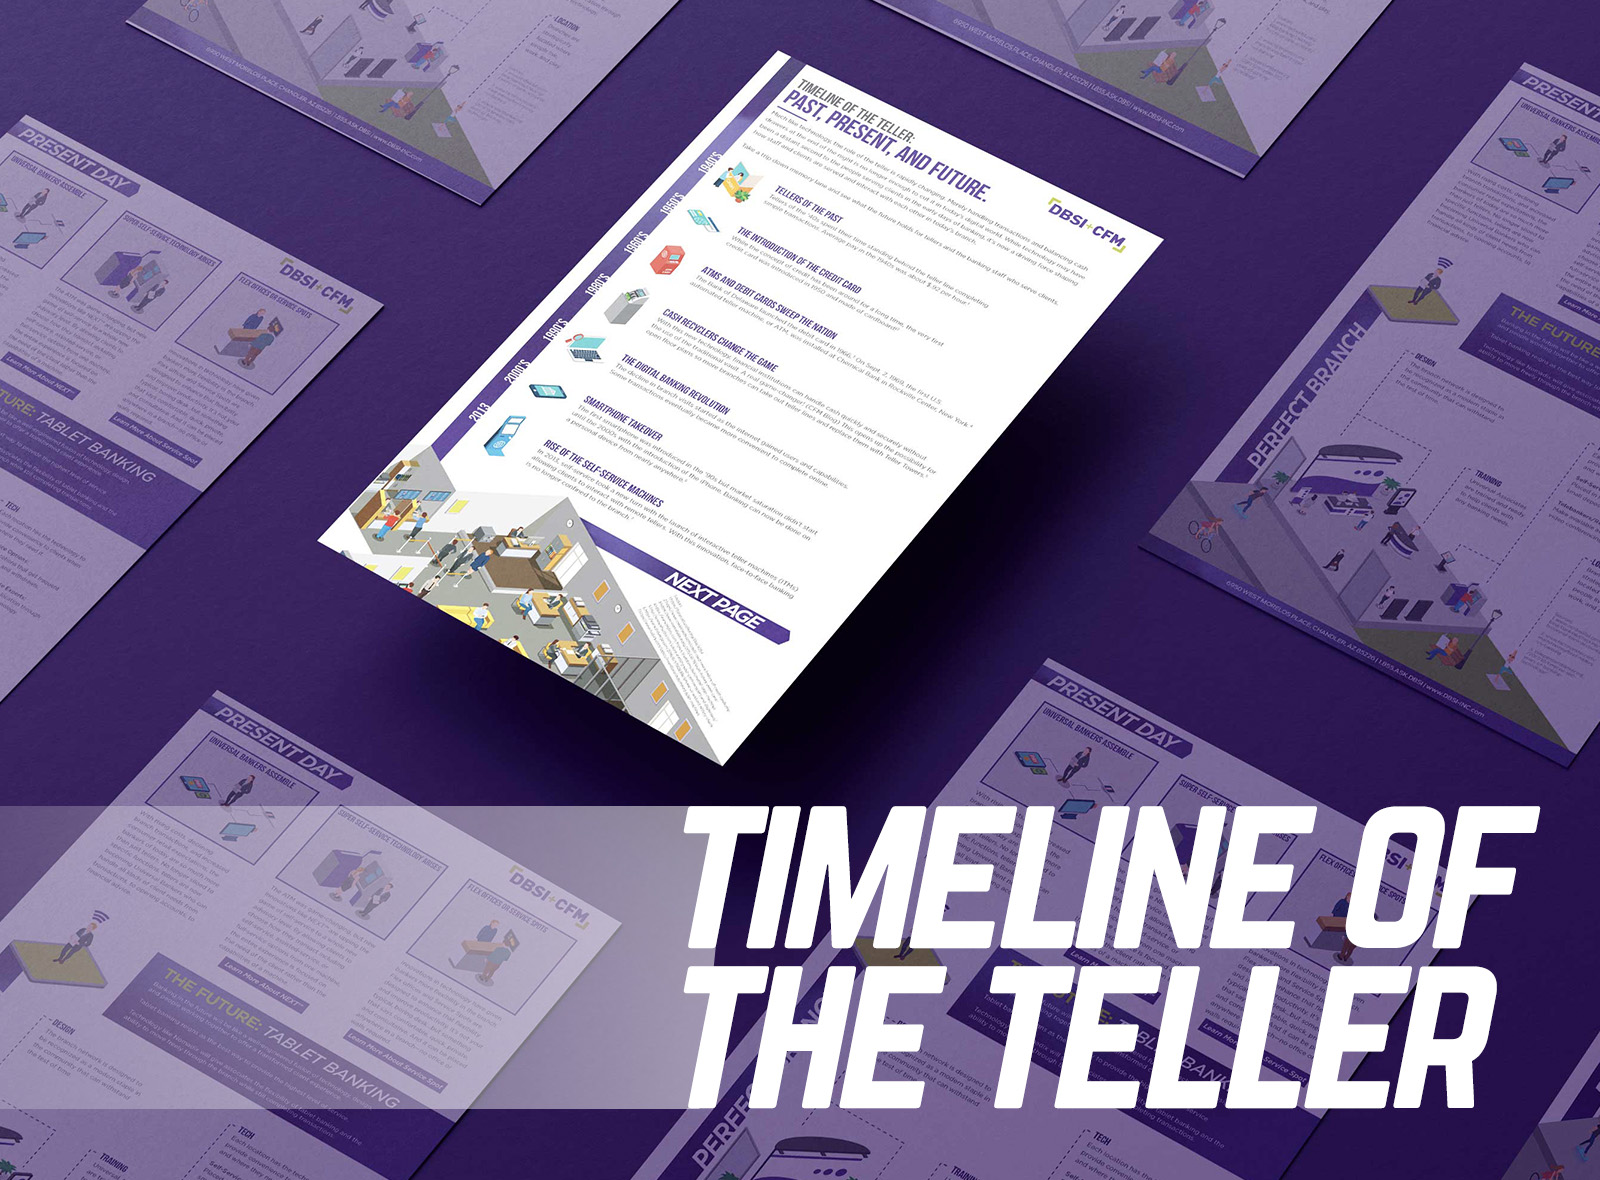 TimelineTeller-resource library image